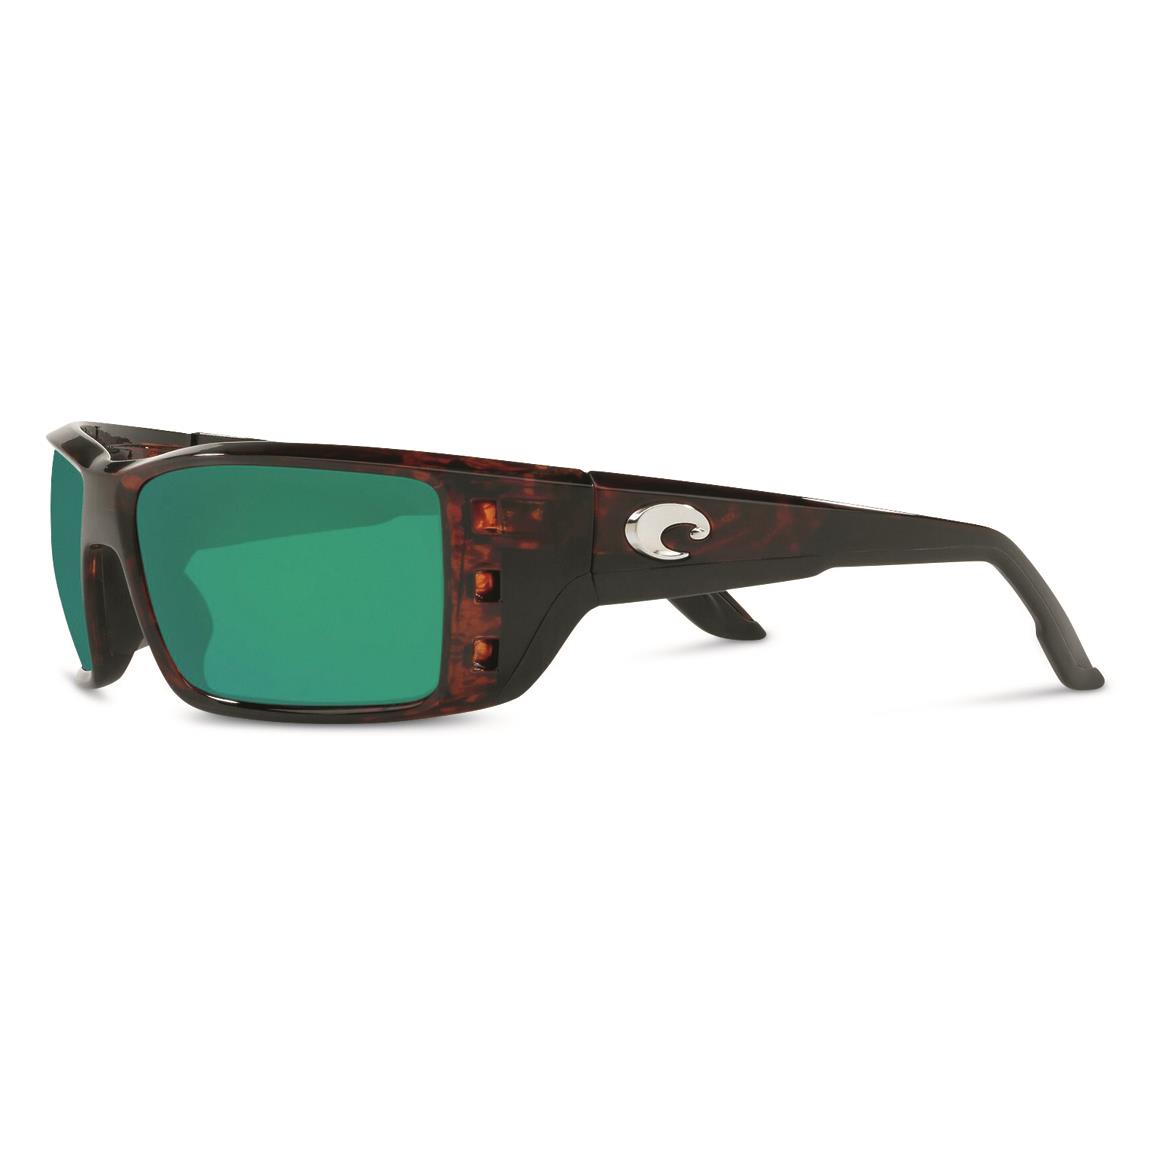 Huk Men's Challenge Polarized Sunglasses - 730832, Sunglasses